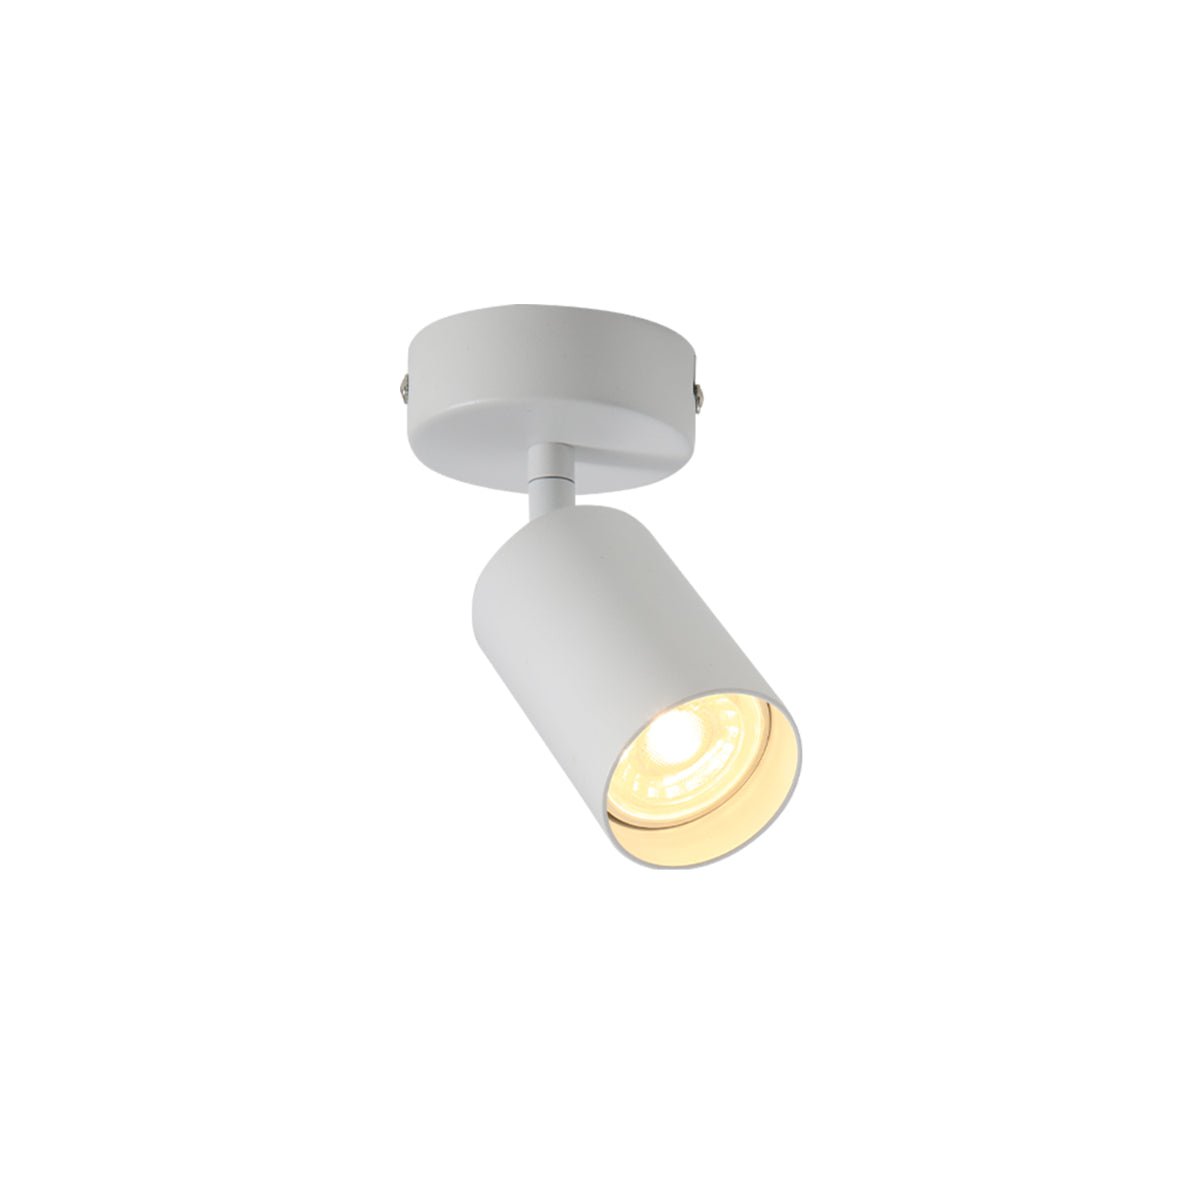 Main image of 1 Way Cylinder Spotlight with GU10 Fitting White | TEKLED 172-03056